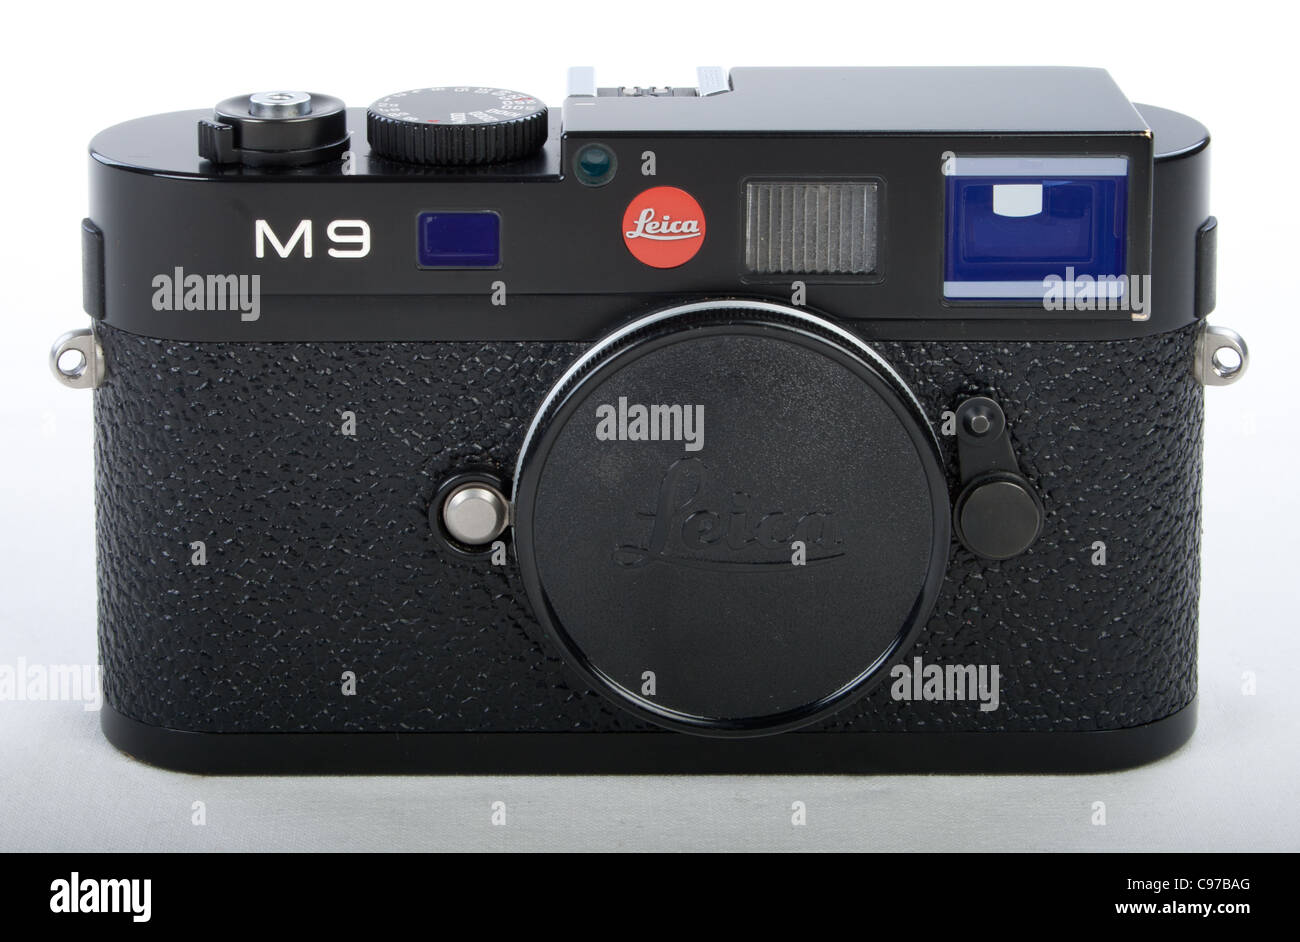 LEICA M9 Digital Rangefinder Camera Body Stock Photo